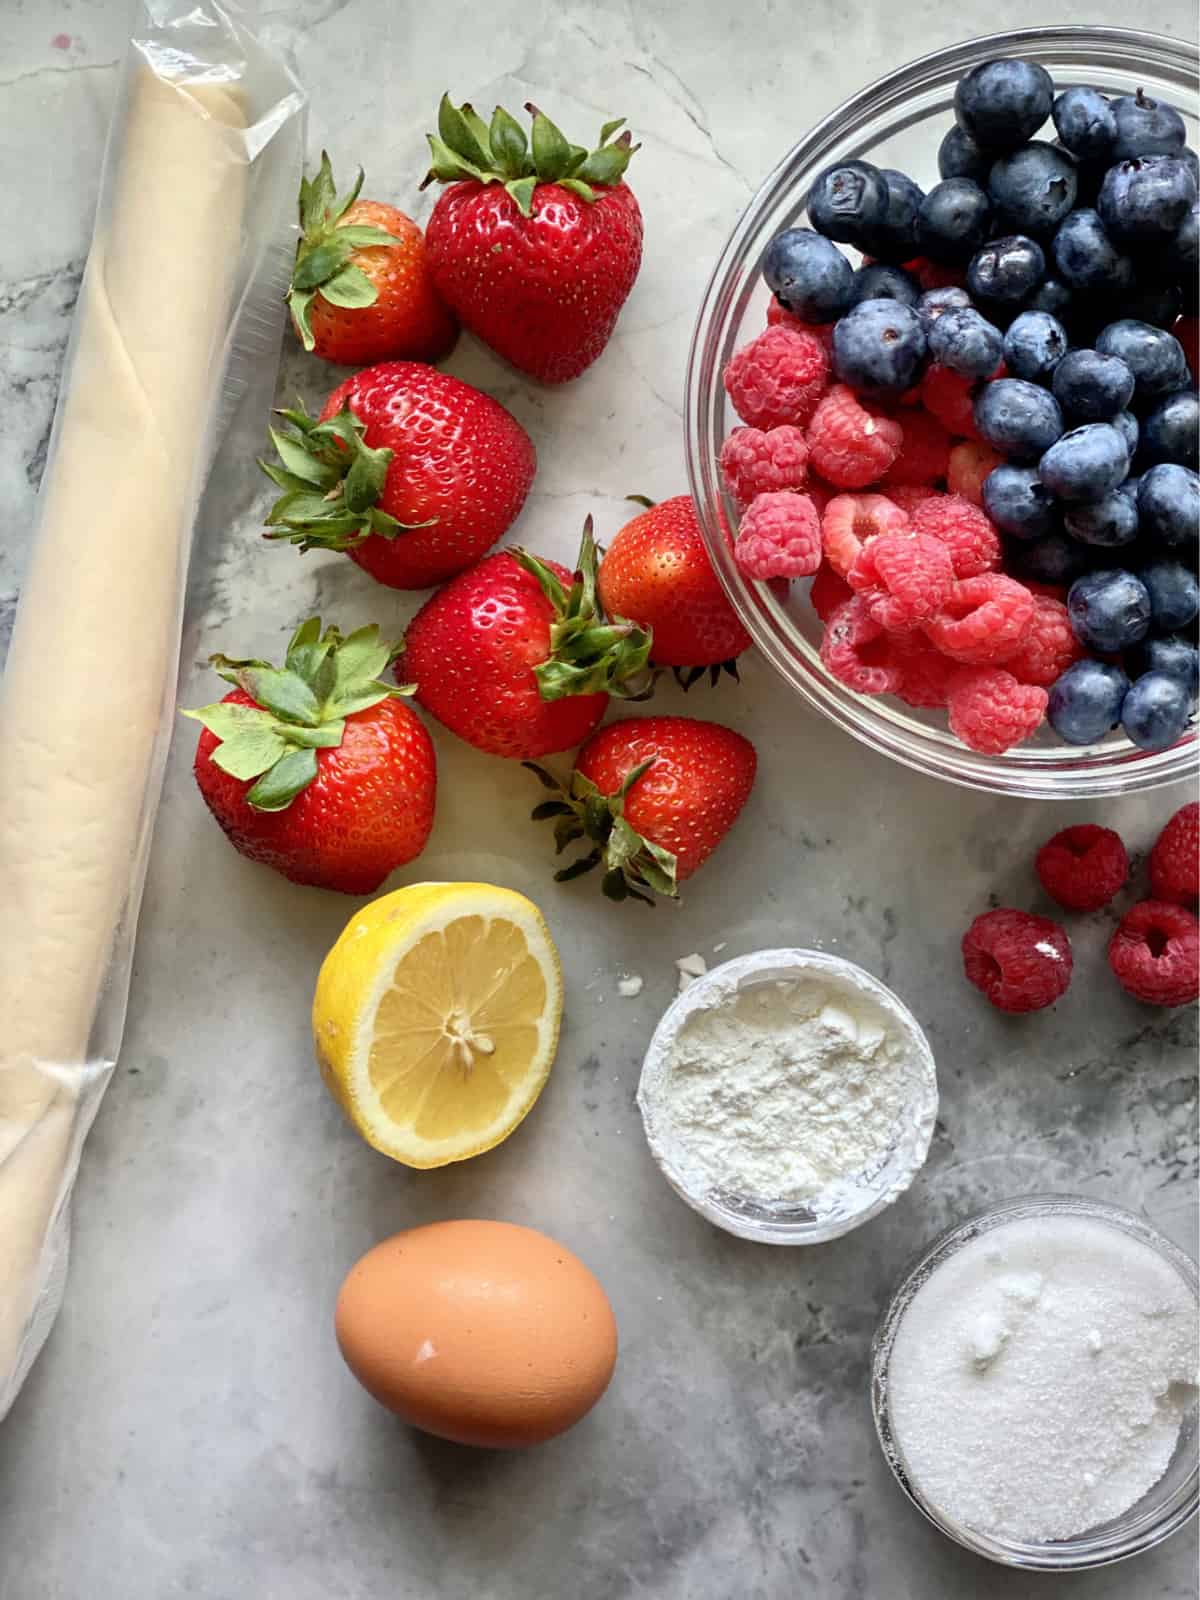 Pie crust dough, strawberries, blueberries, raspberries, lemon, egg, sugar and cornstarch.